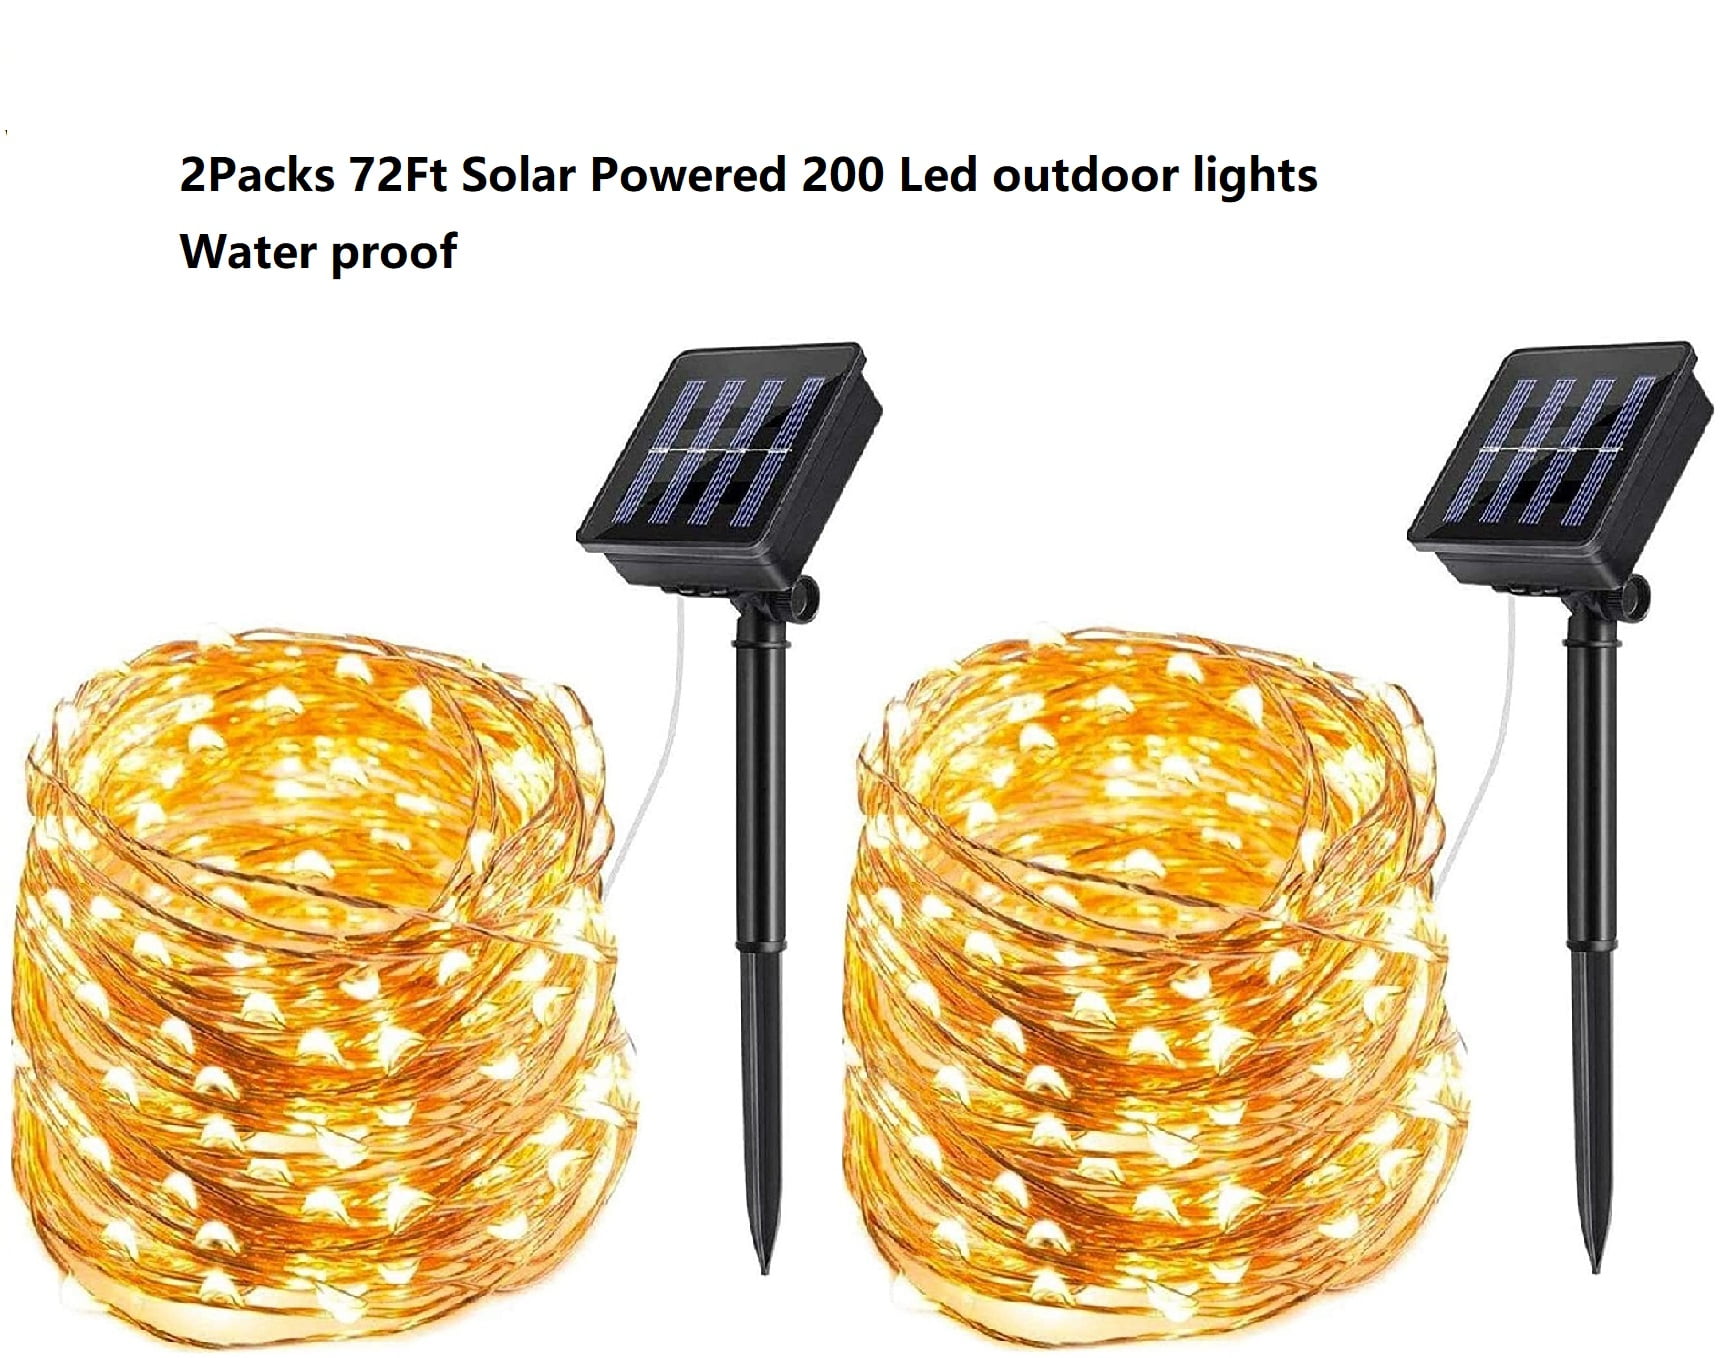 Solar Fairy Lights Outdoor Solar Bulbs String Lights 8 Modes IP65 Waterproof New 